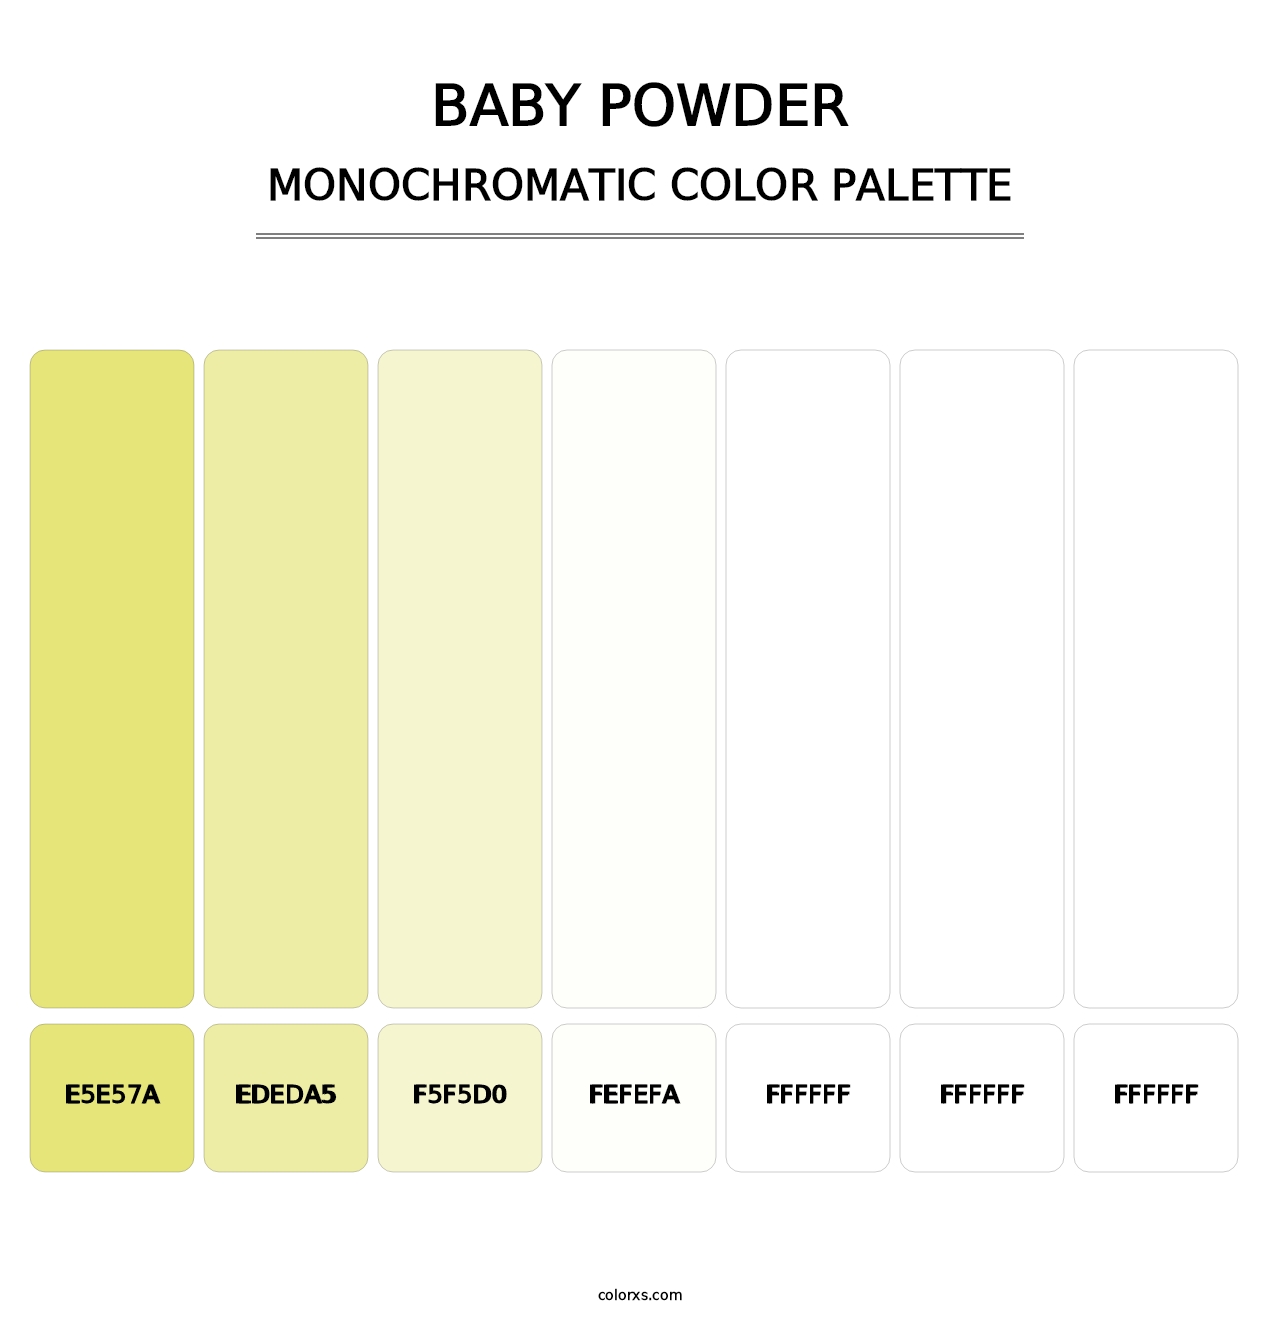 Baby Powder - Monochromatic Color Palette